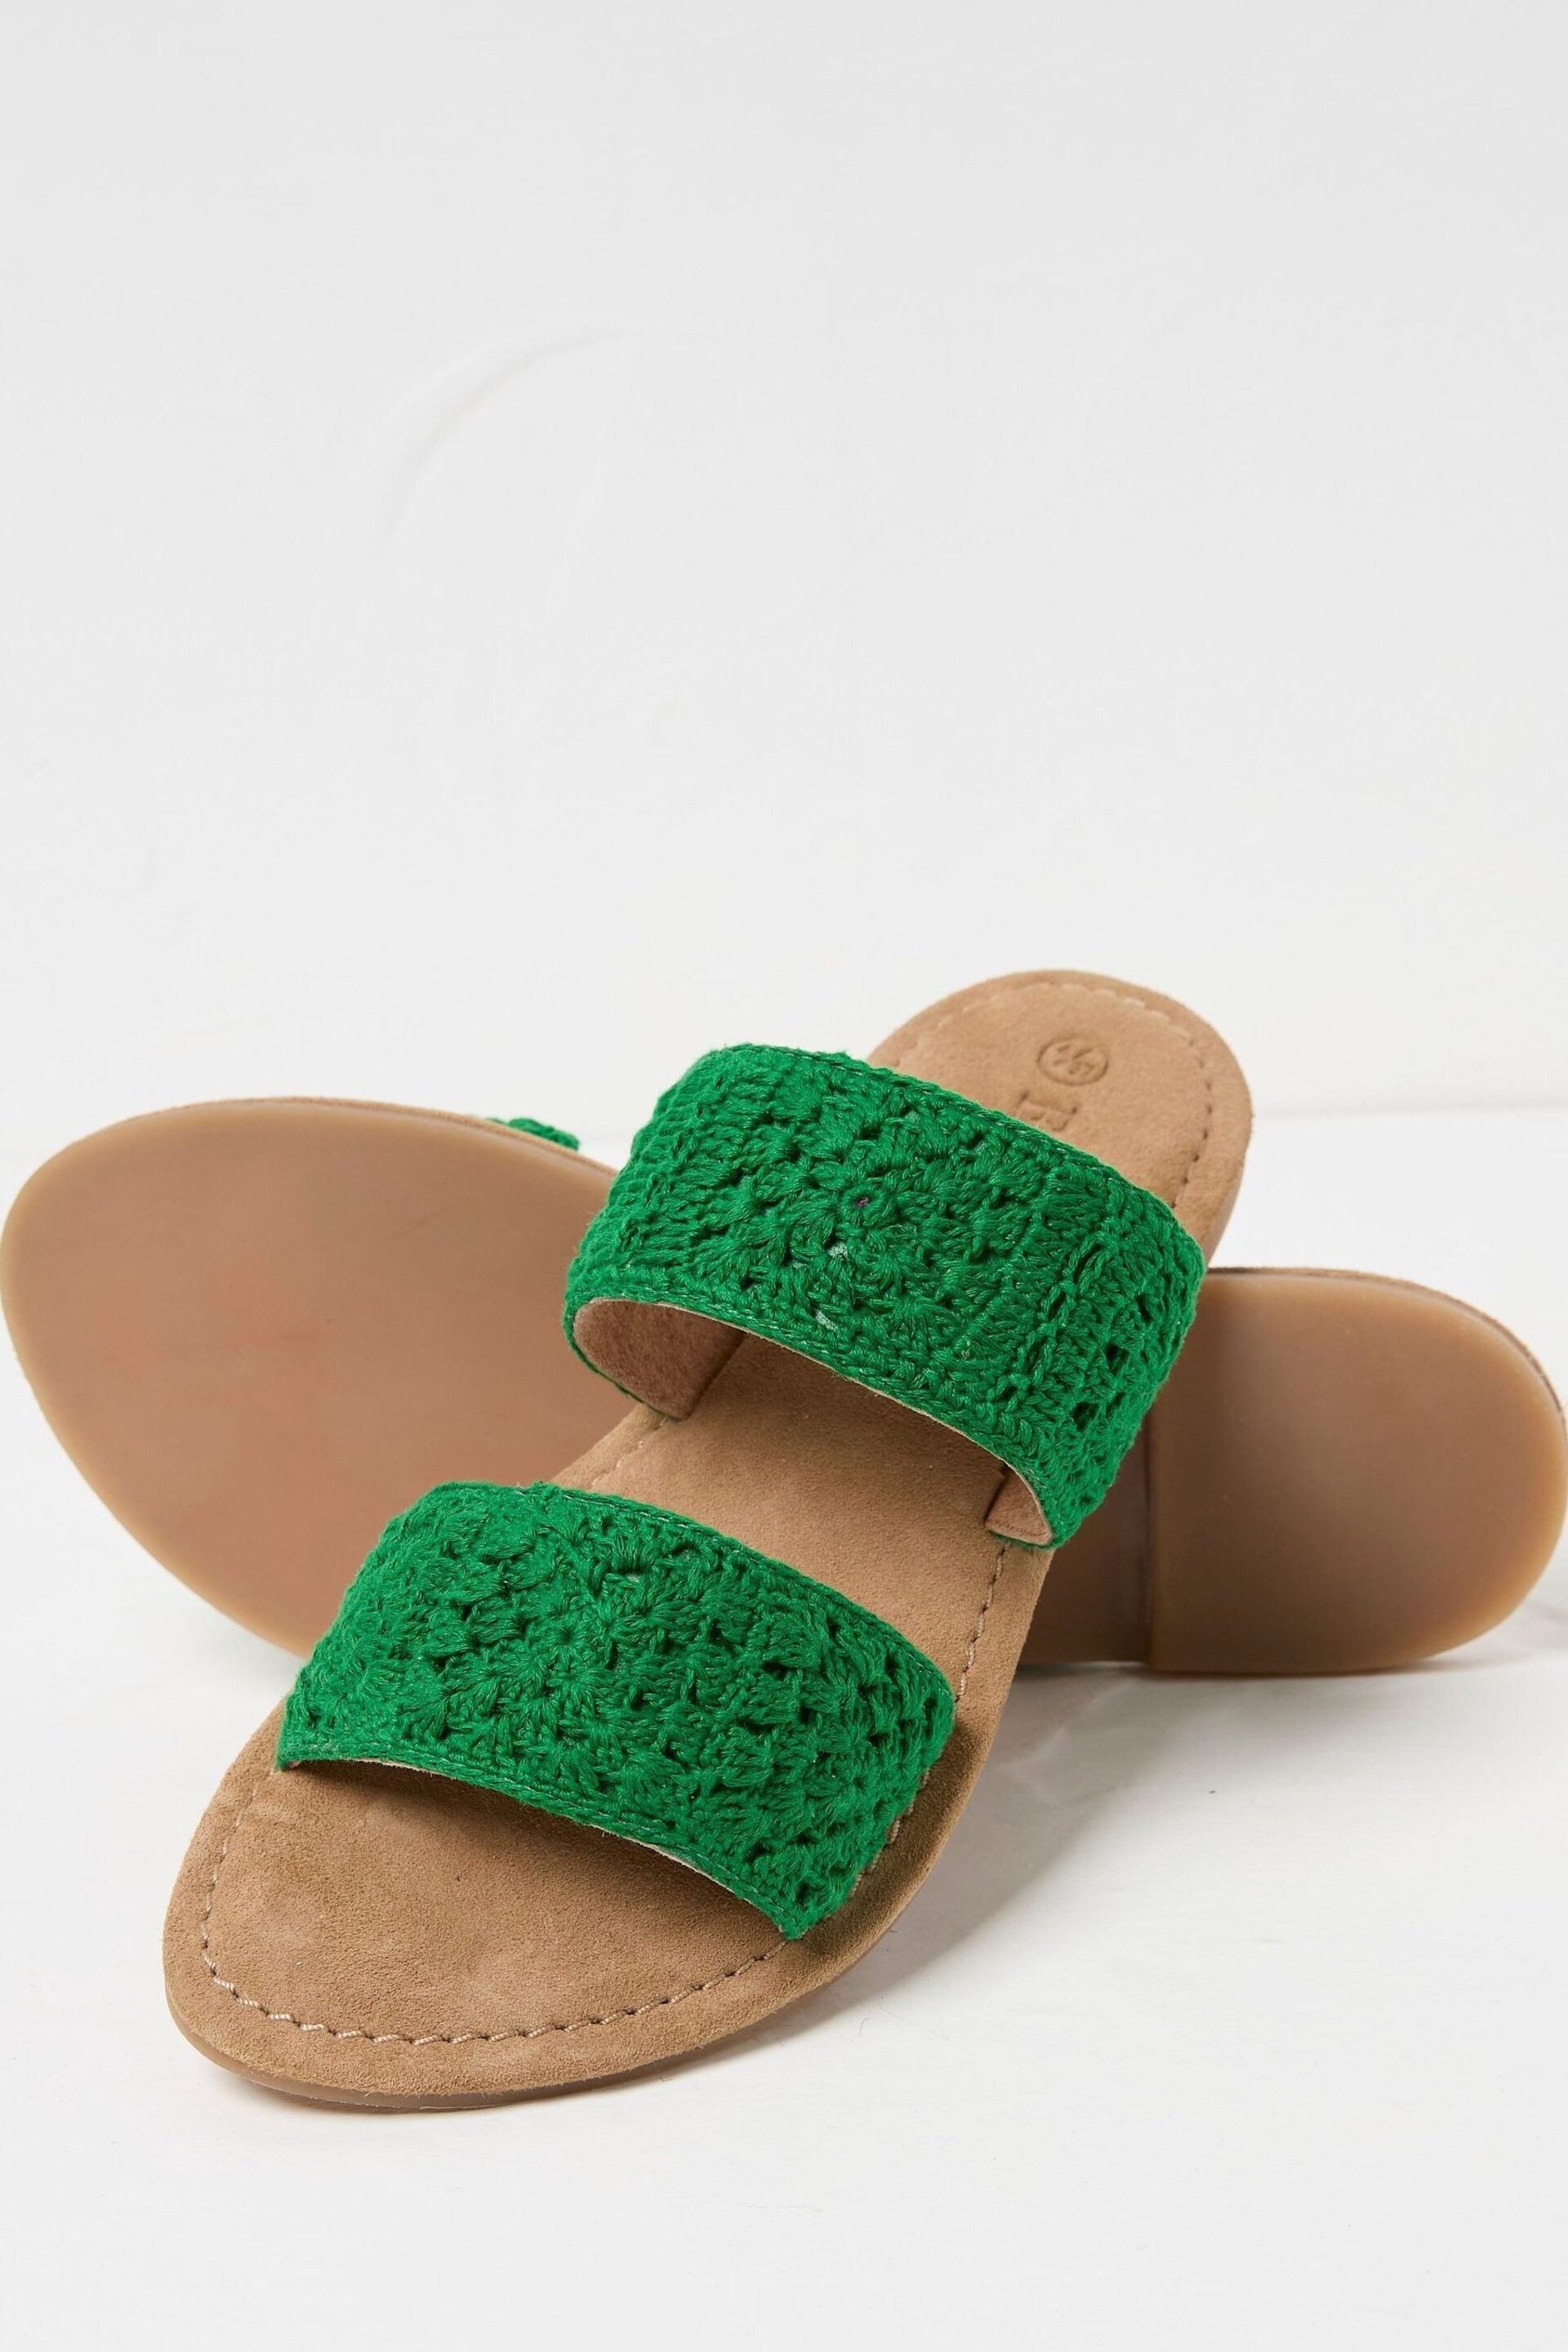 FatFace Green Penelope Crochet Sliders - Image 2 of 3